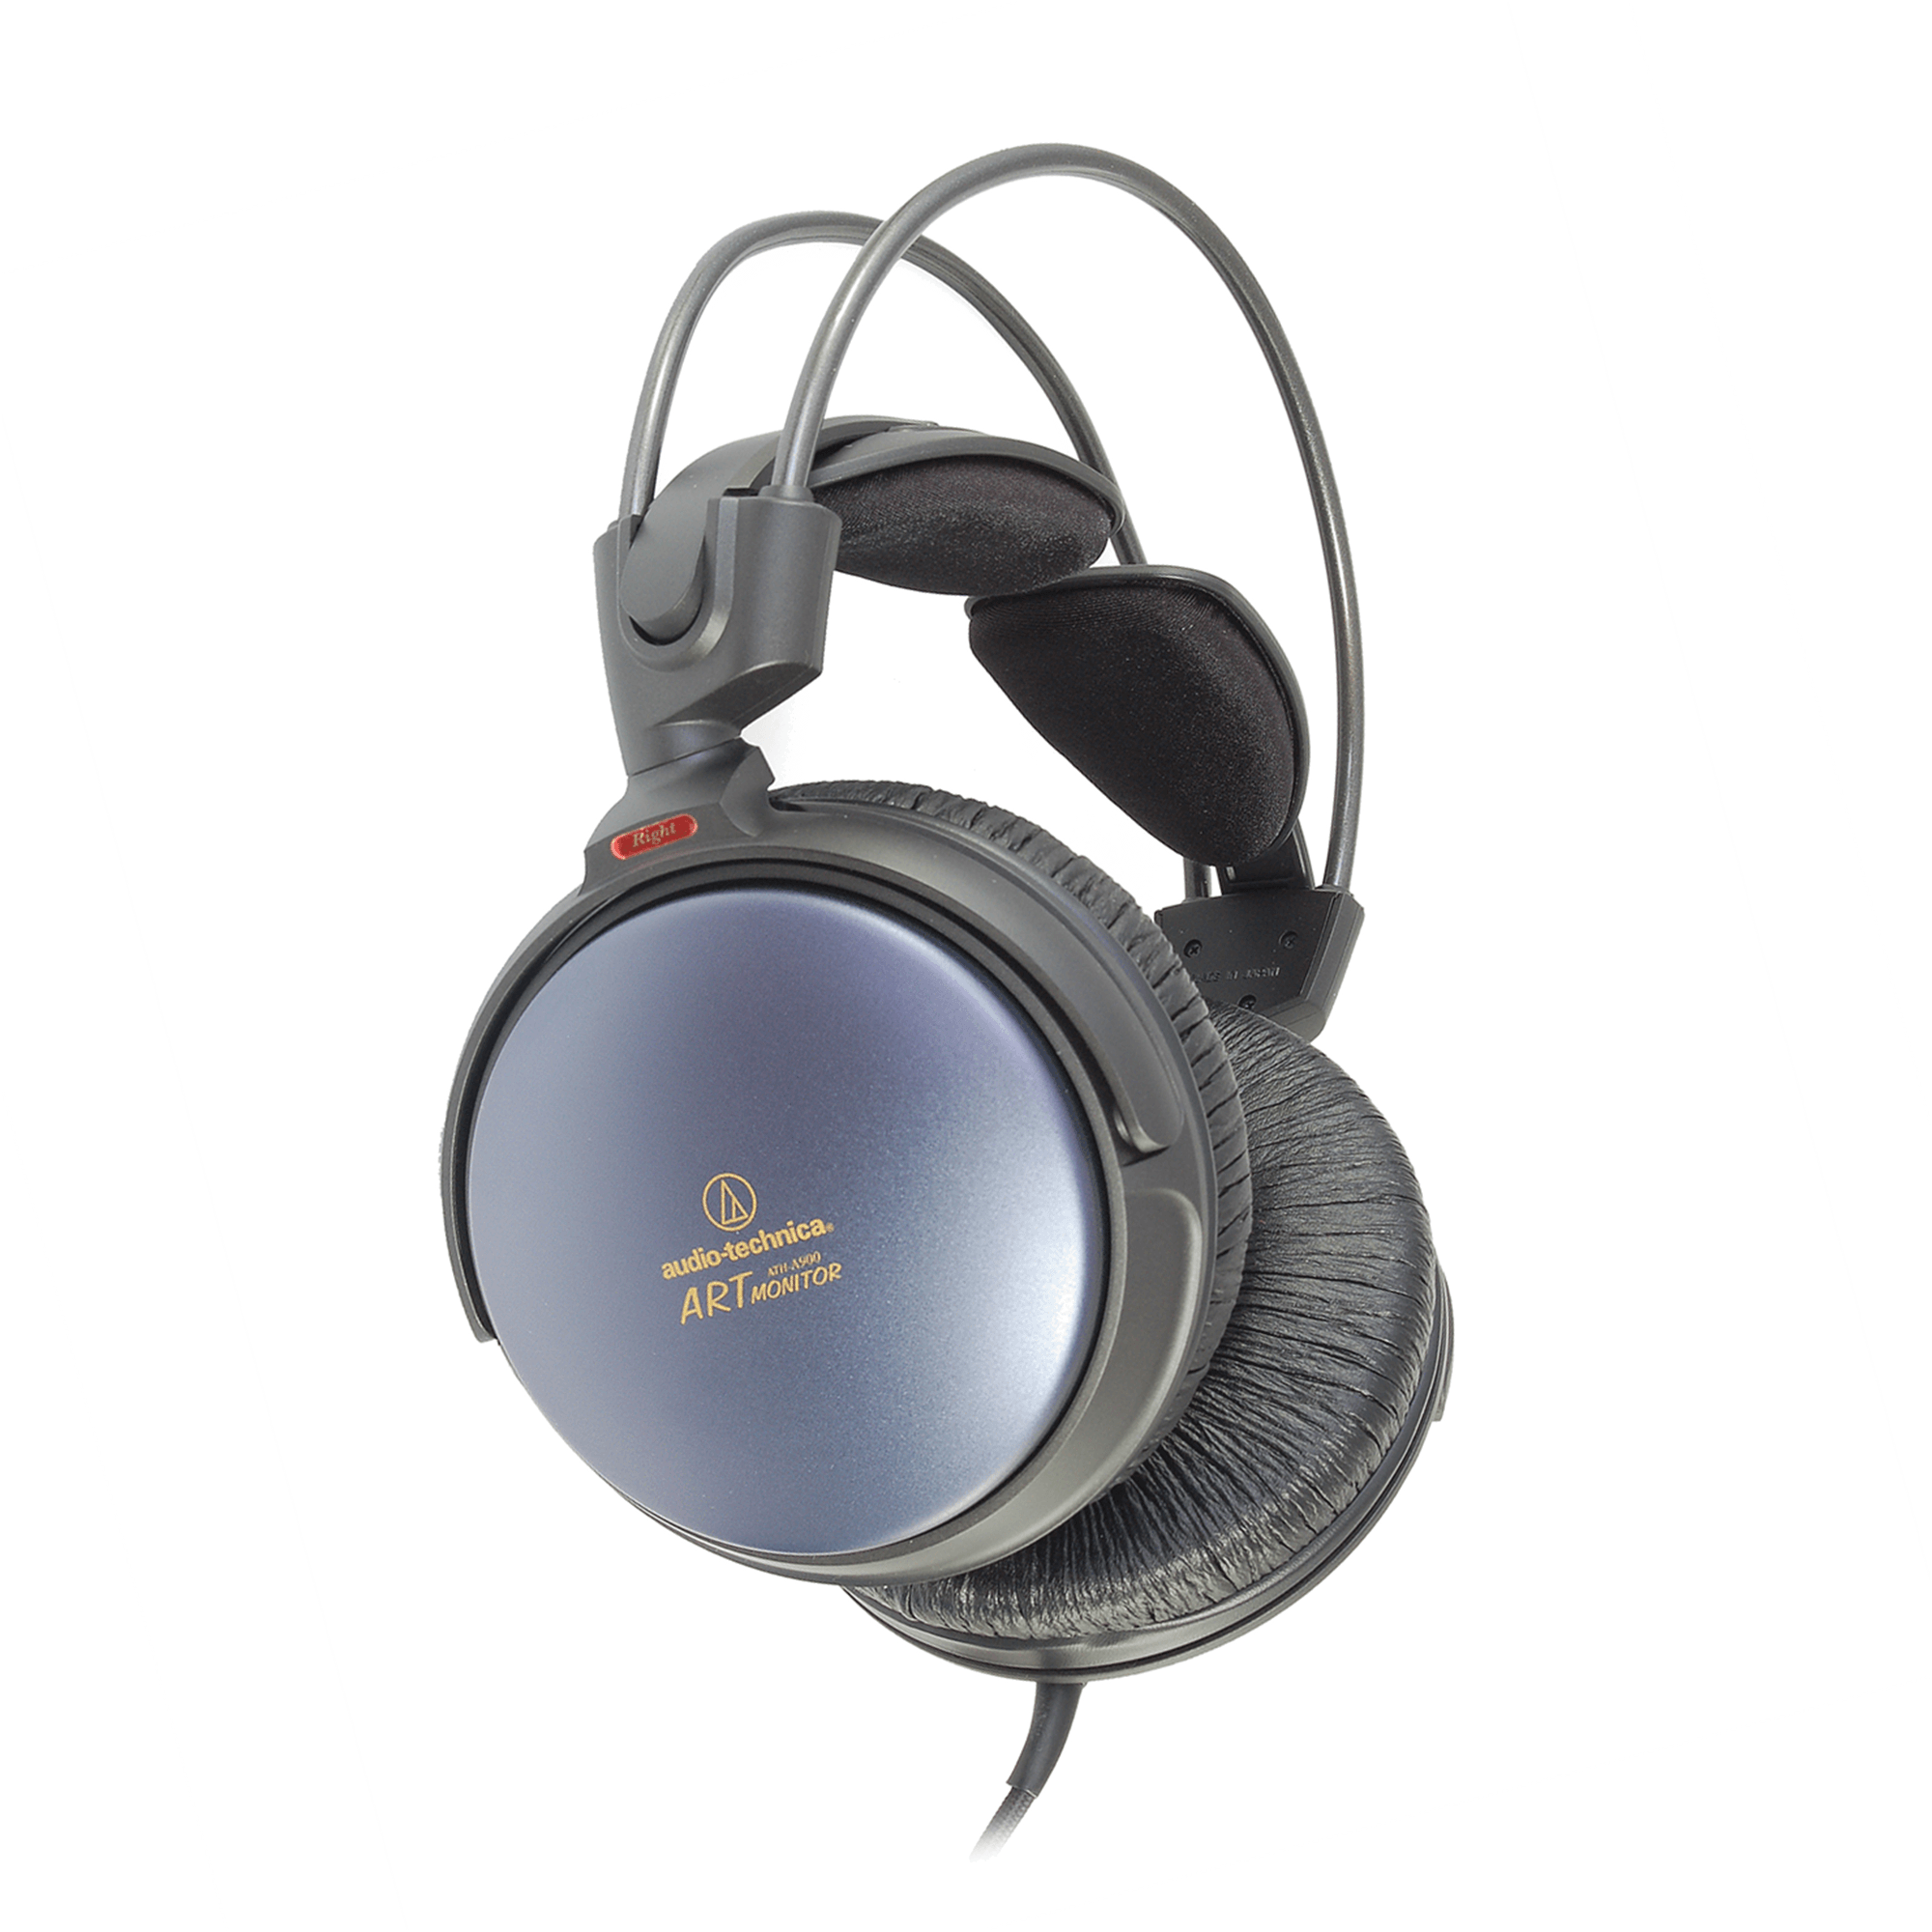 ATH-A900 - Audiophile Closed-back Dynamic Headphones | Audio-Technica